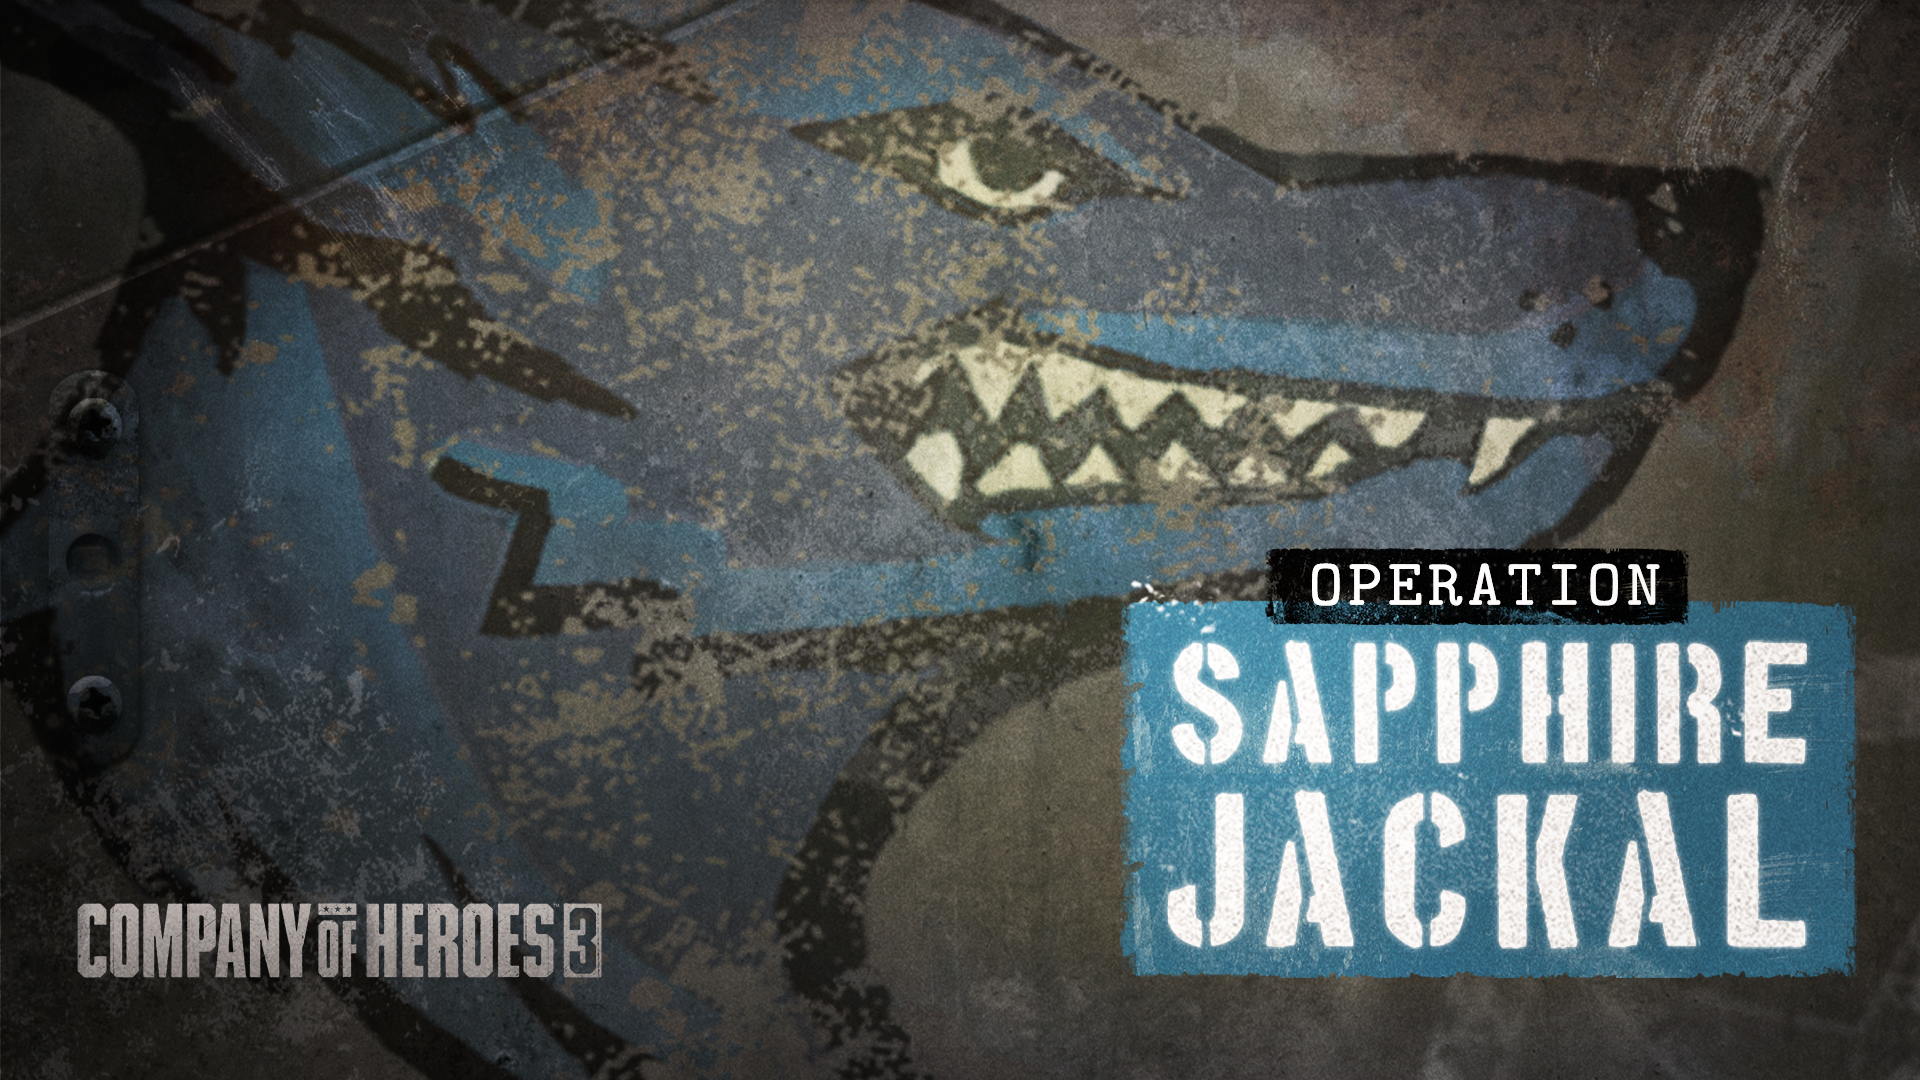 Company of Heroes 3 - Sapphire Jackal Update